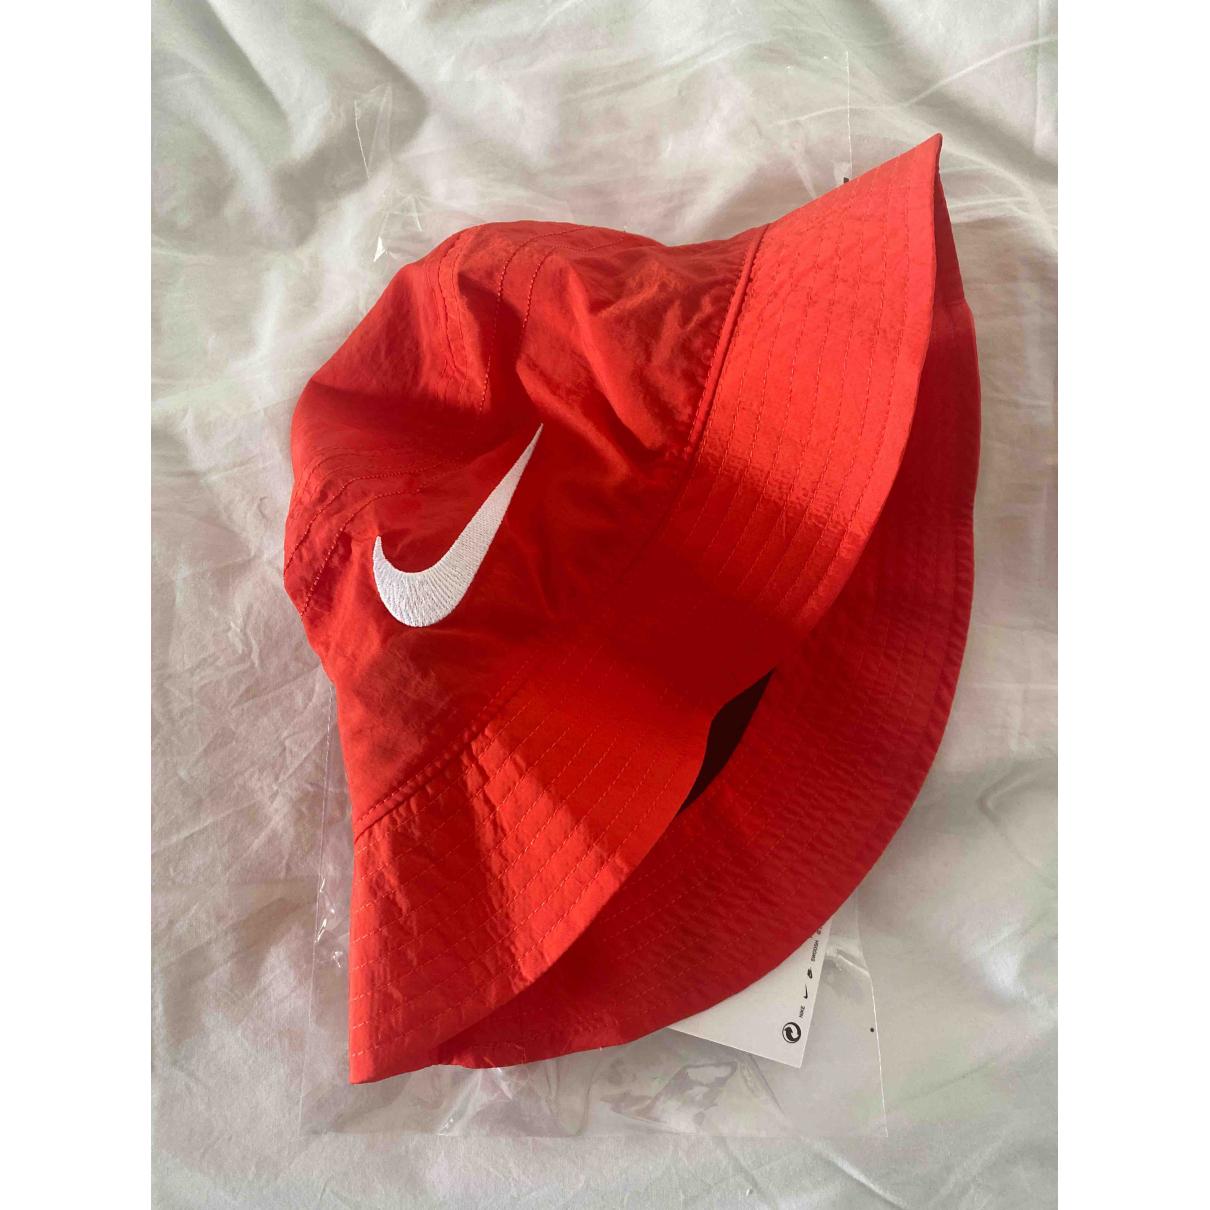 Buy Nike x Stussy Hat online